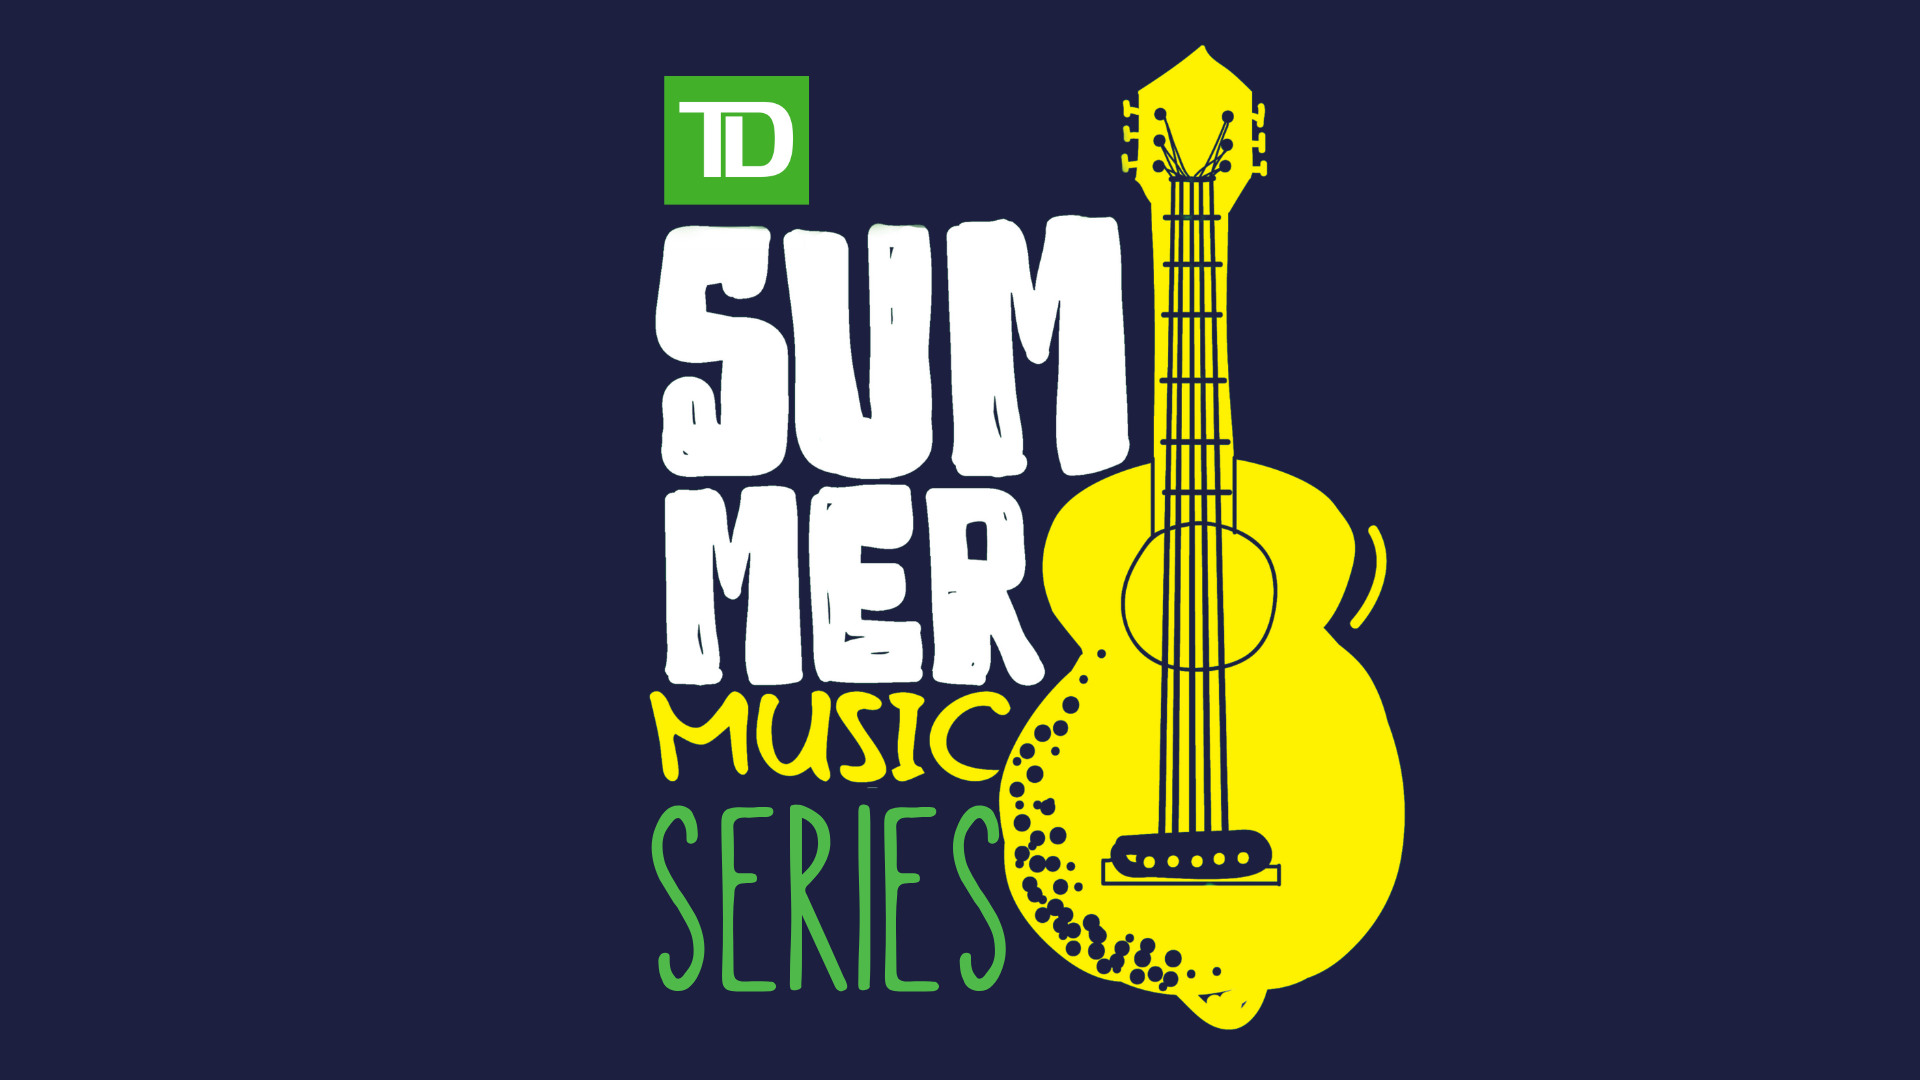 TD Summer Music Series